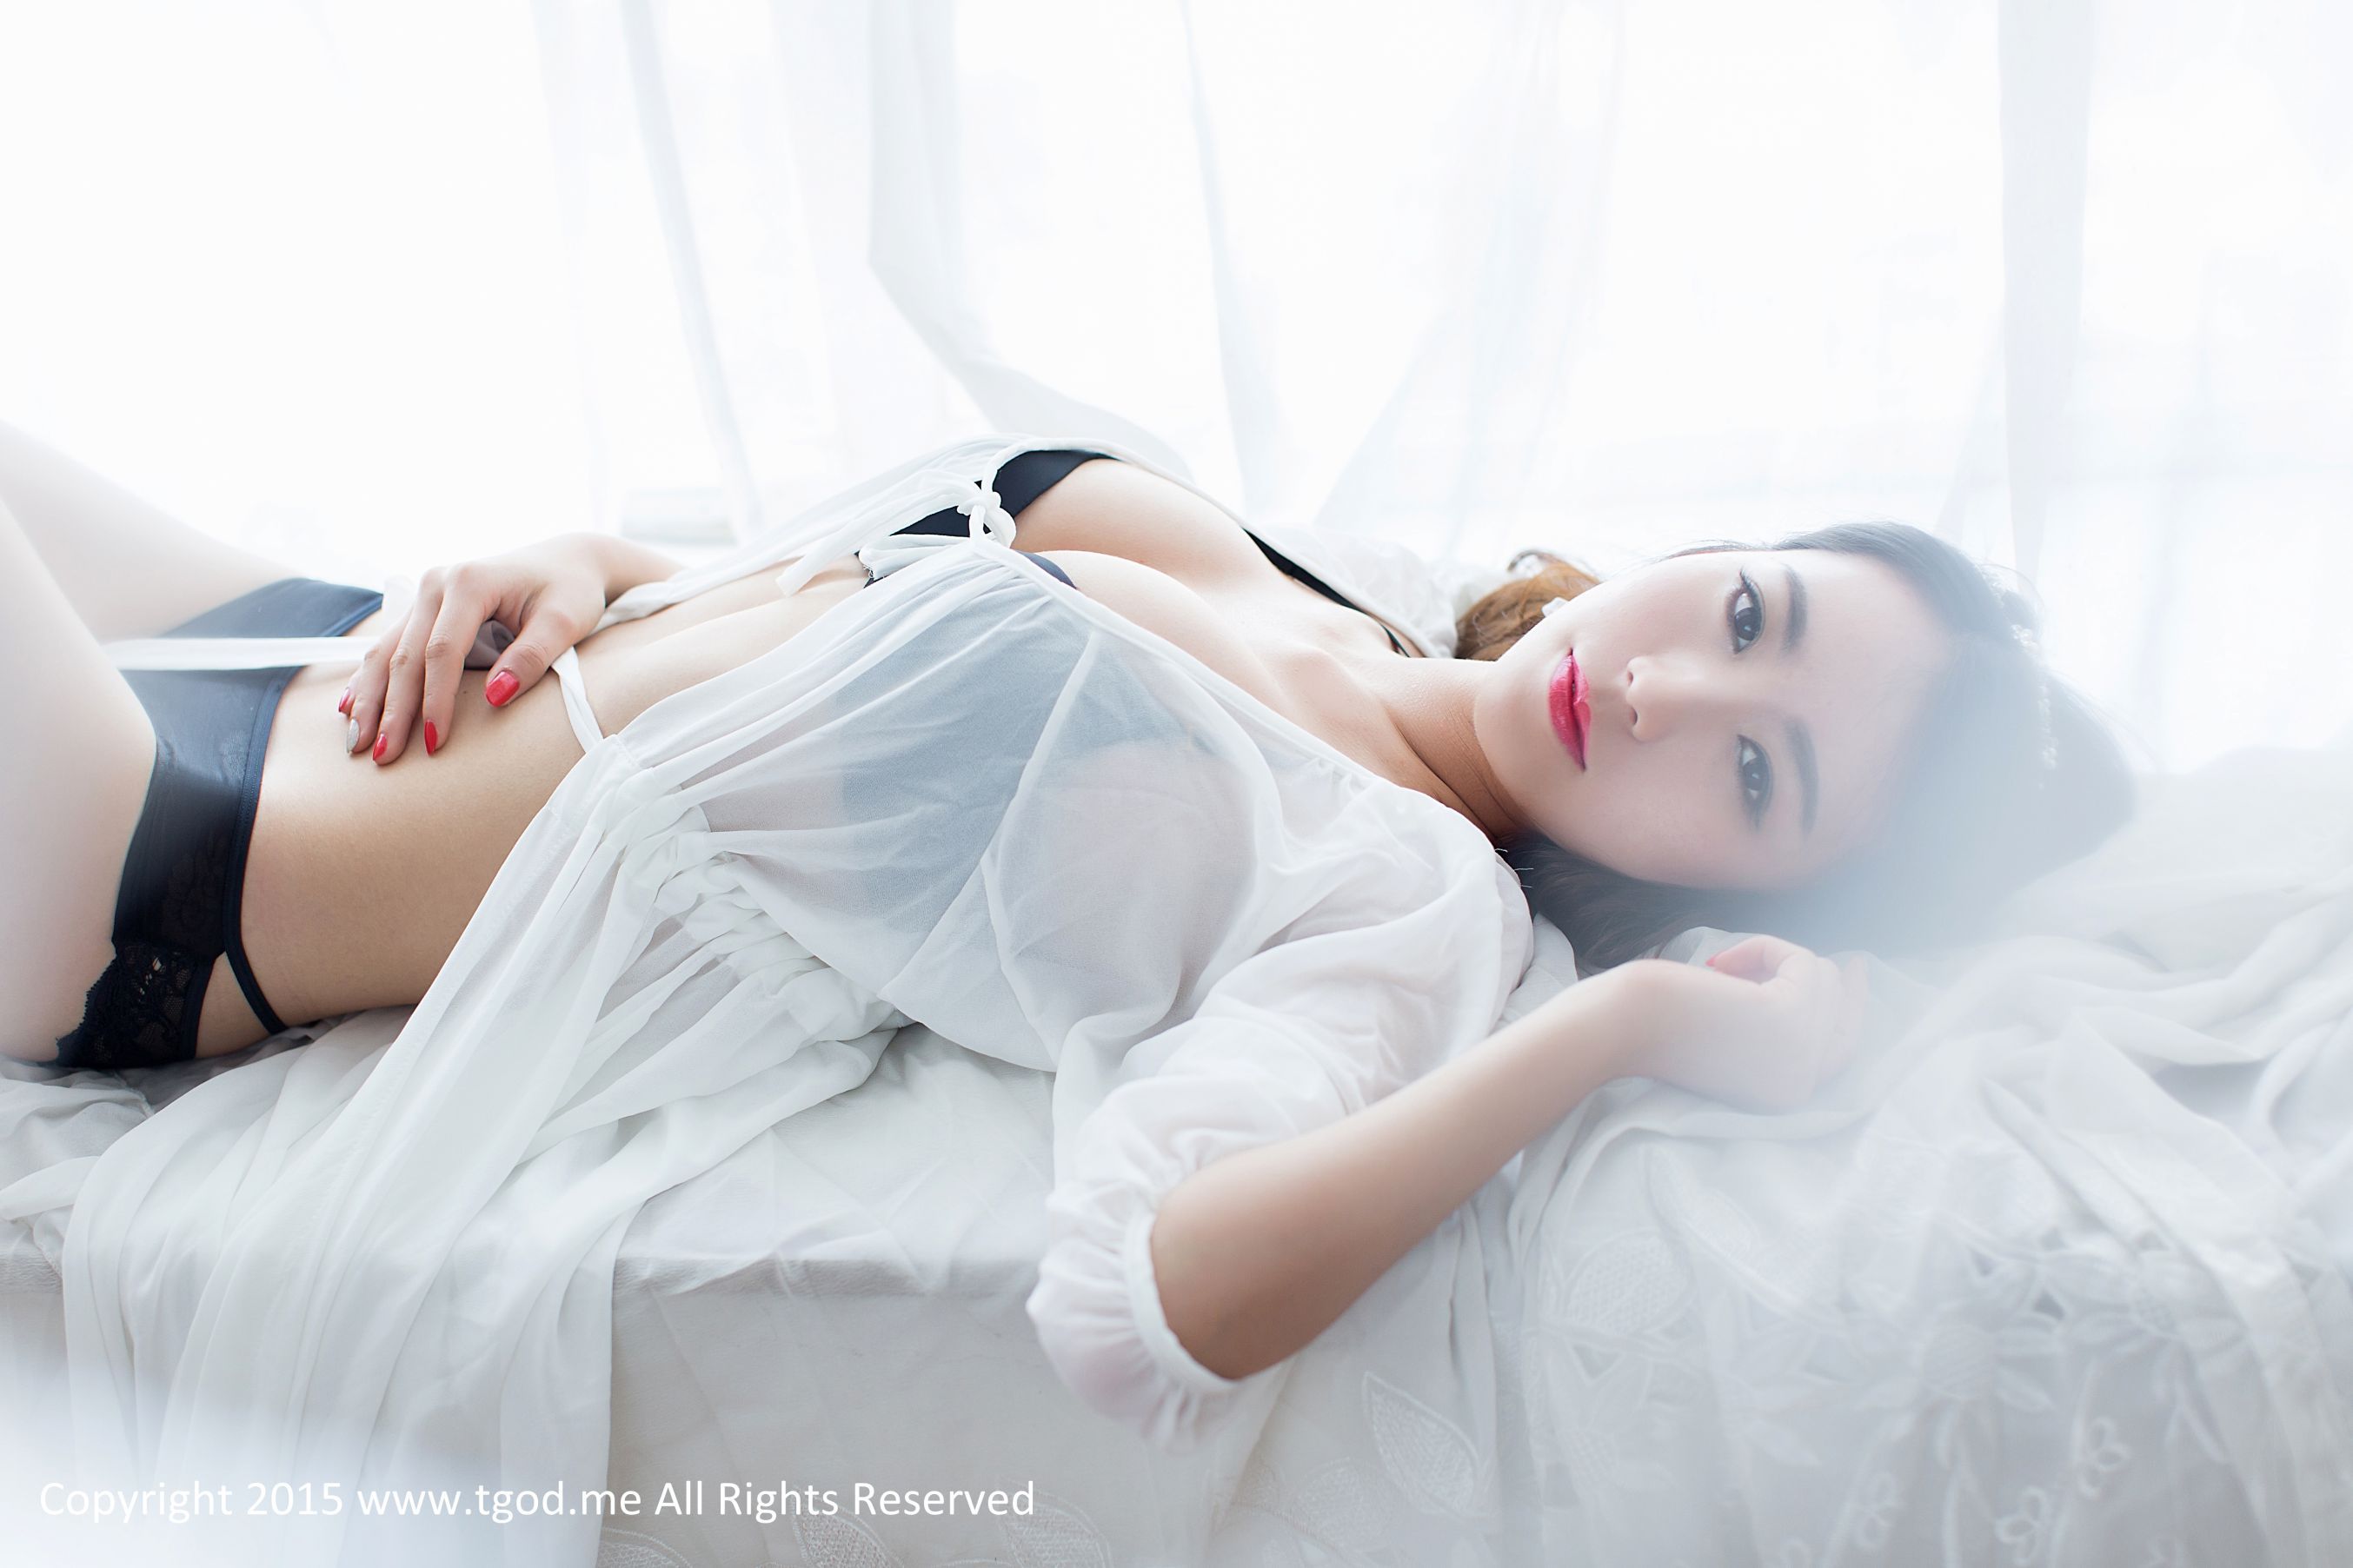 Goddess Deng XueSweet ‘Lace Temptation’ Japanese Photo Collection -TGOD Goddess